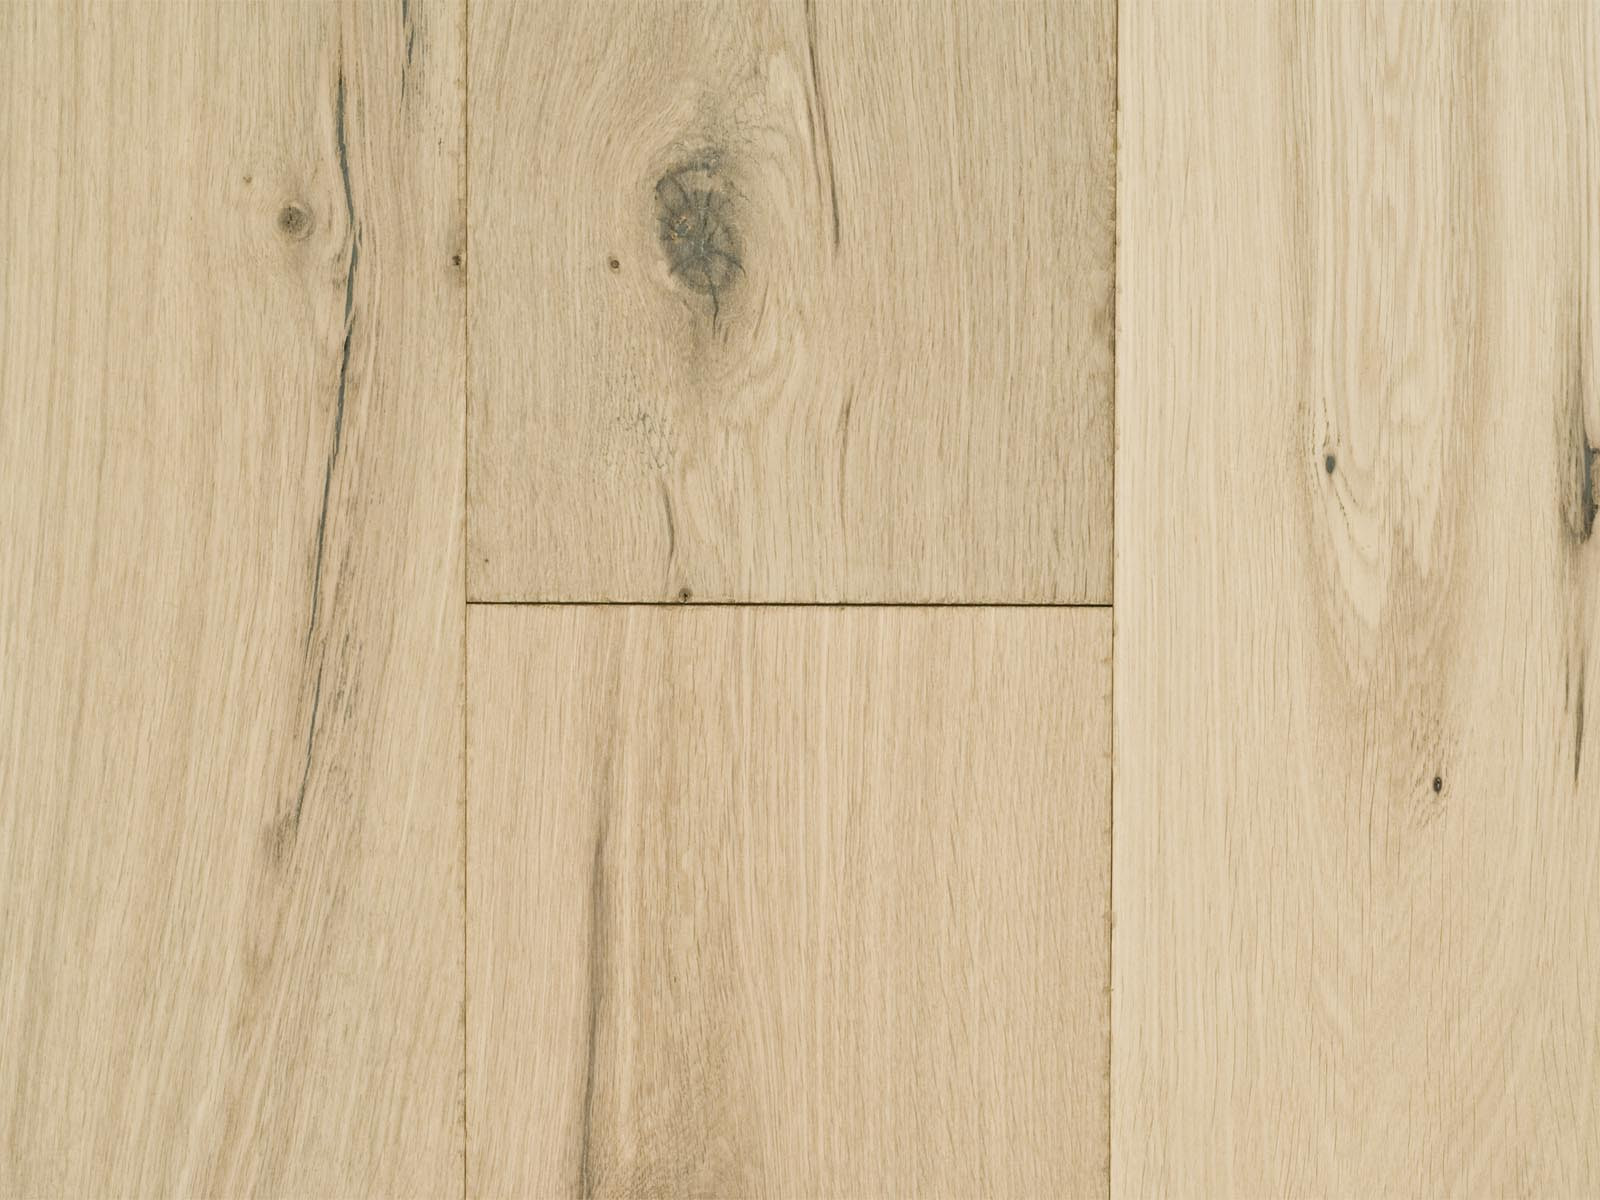 hardwood flooring athens ga of duchateau hardwood flooring houston tx discount engineered wood with regard to white oiled european oak